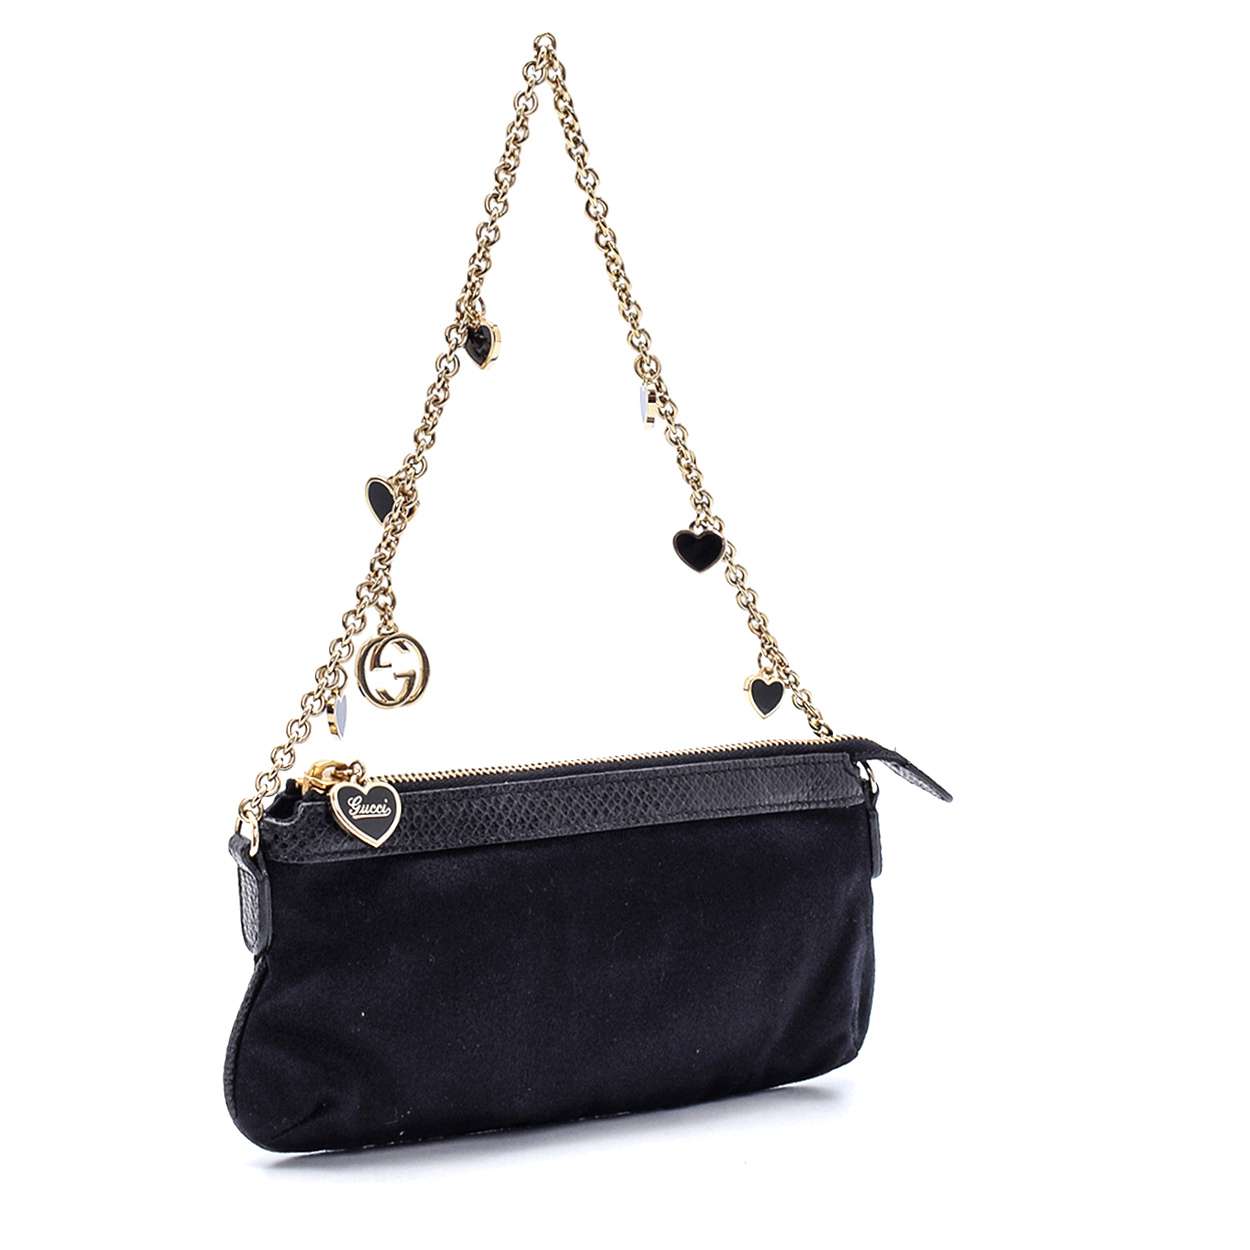 Gucci - Black Satin and Python Detail Pochette Bag 